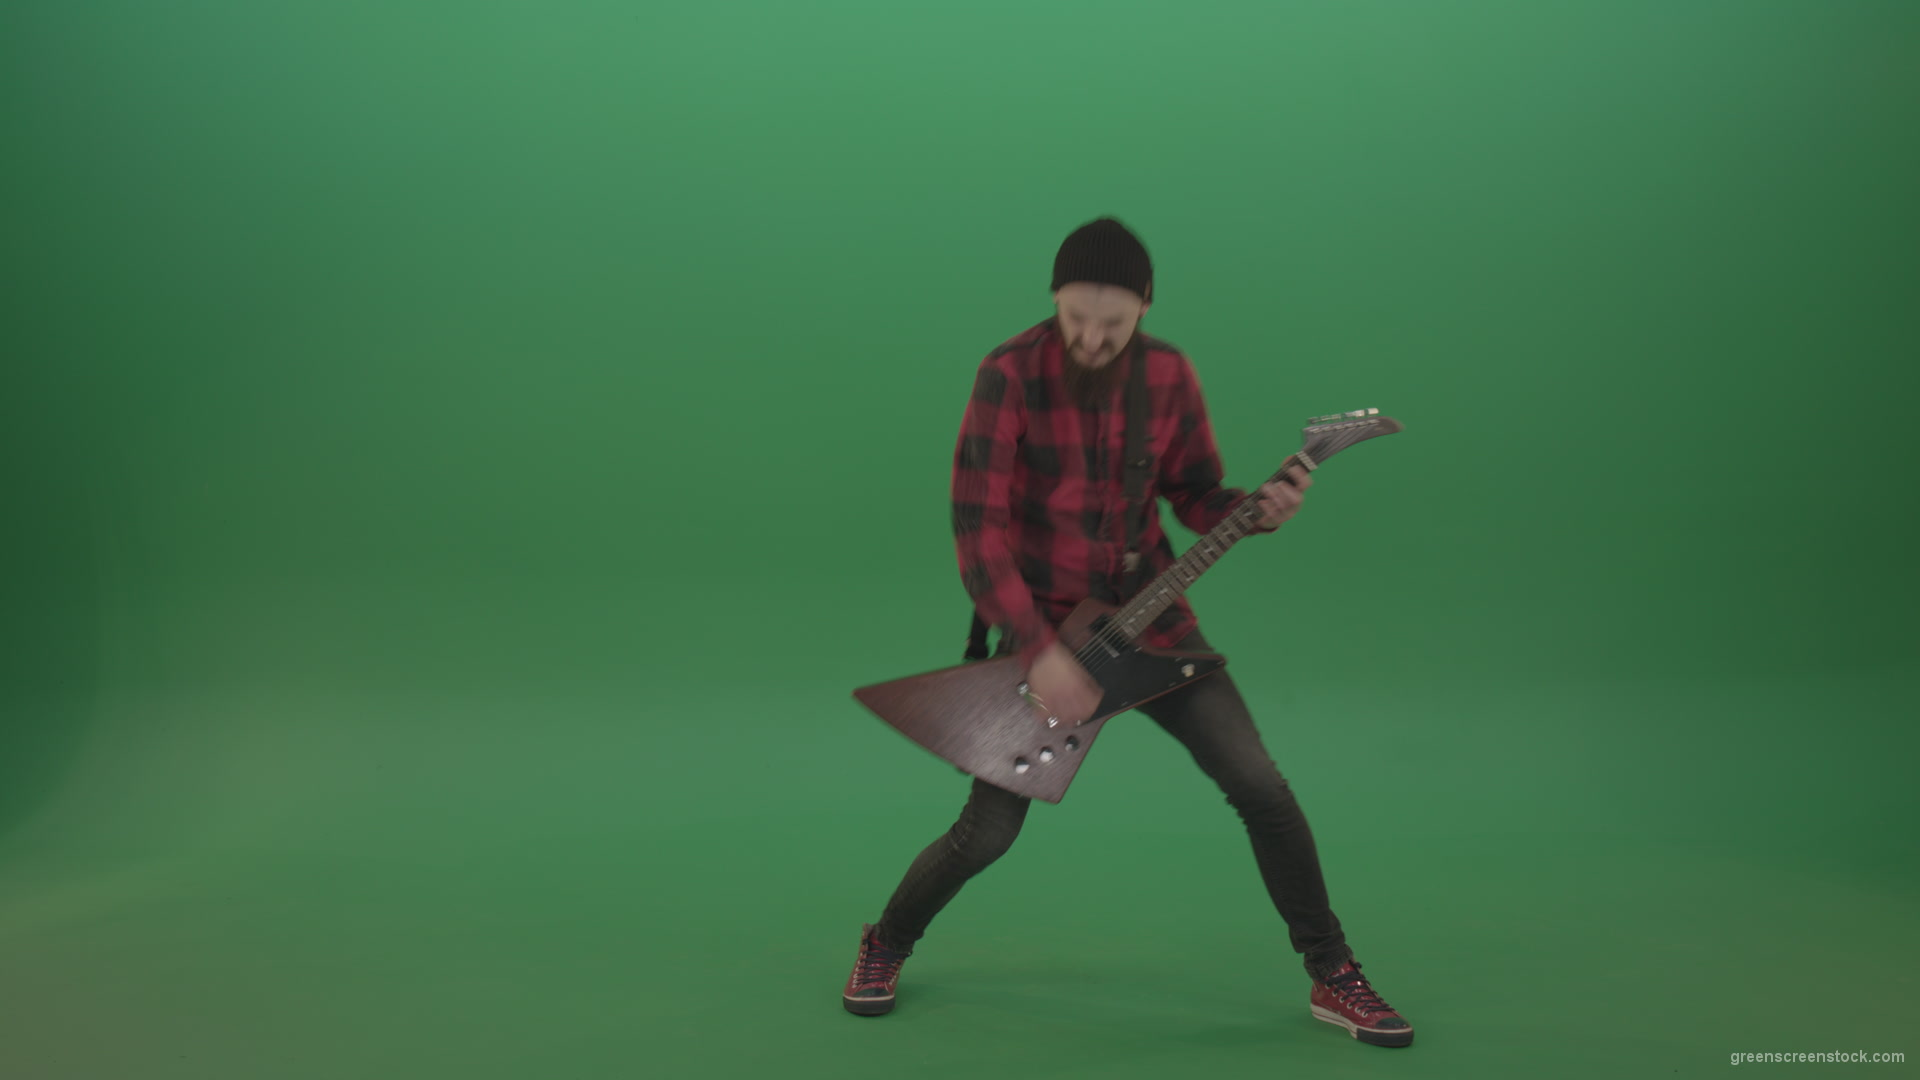 Full-size-Green-Screen-Musician-Rock-Guitarist-man-in-red-shirt-play-guitar-on-green-screen_004 Green Screen Stock